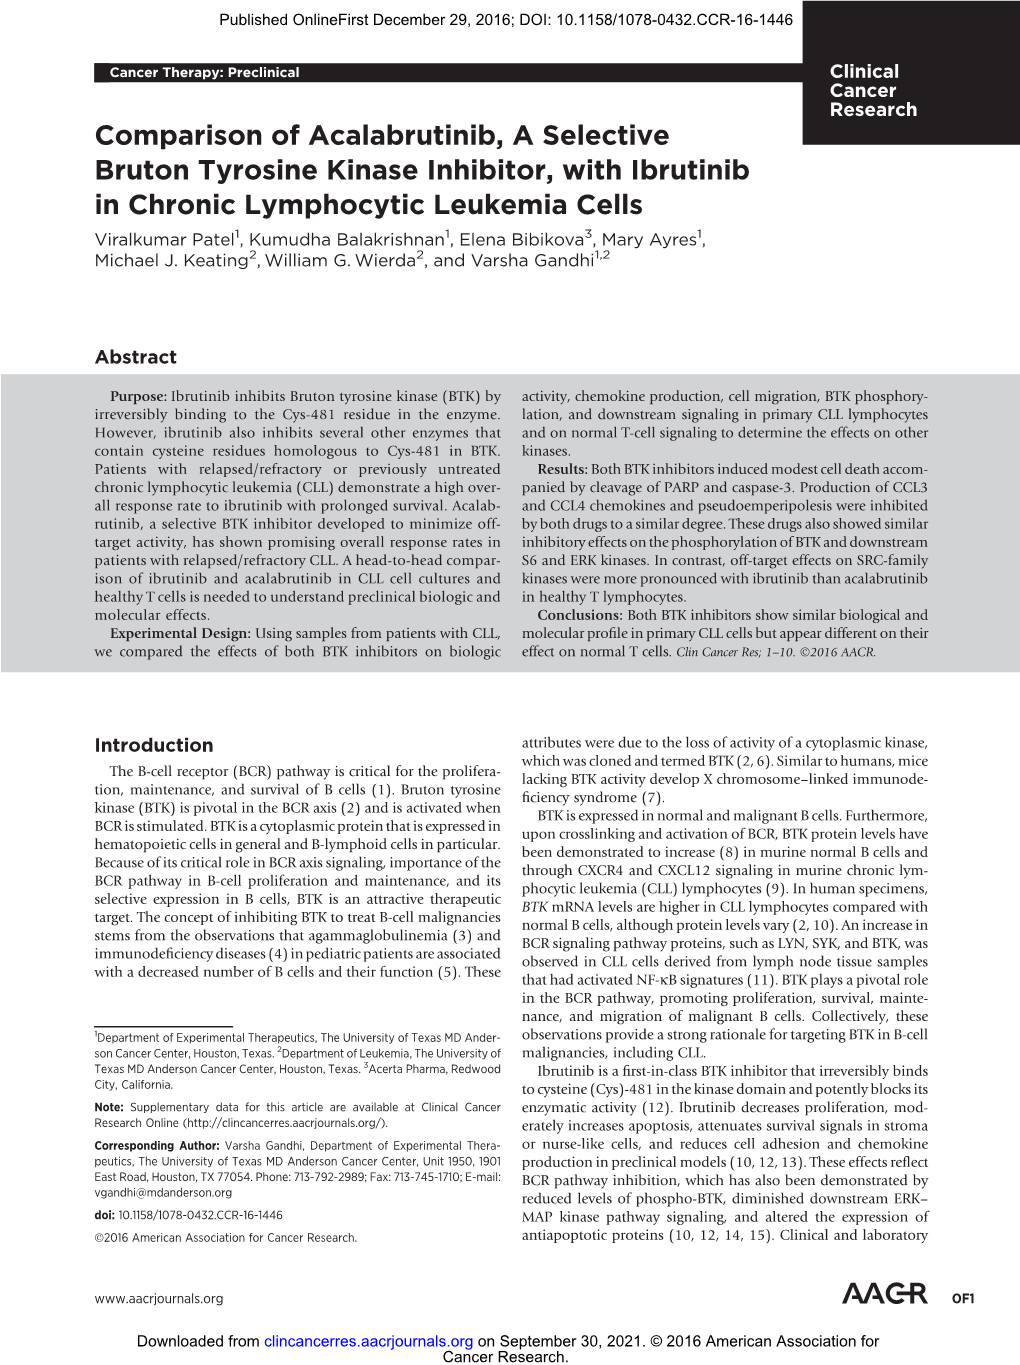 Comparison of Acalabrutinib, a Selective Bruton Tyrosine Kinase Inhibitor, with Ibrutinib in Chronic Lymphocytic Leukemia Cells